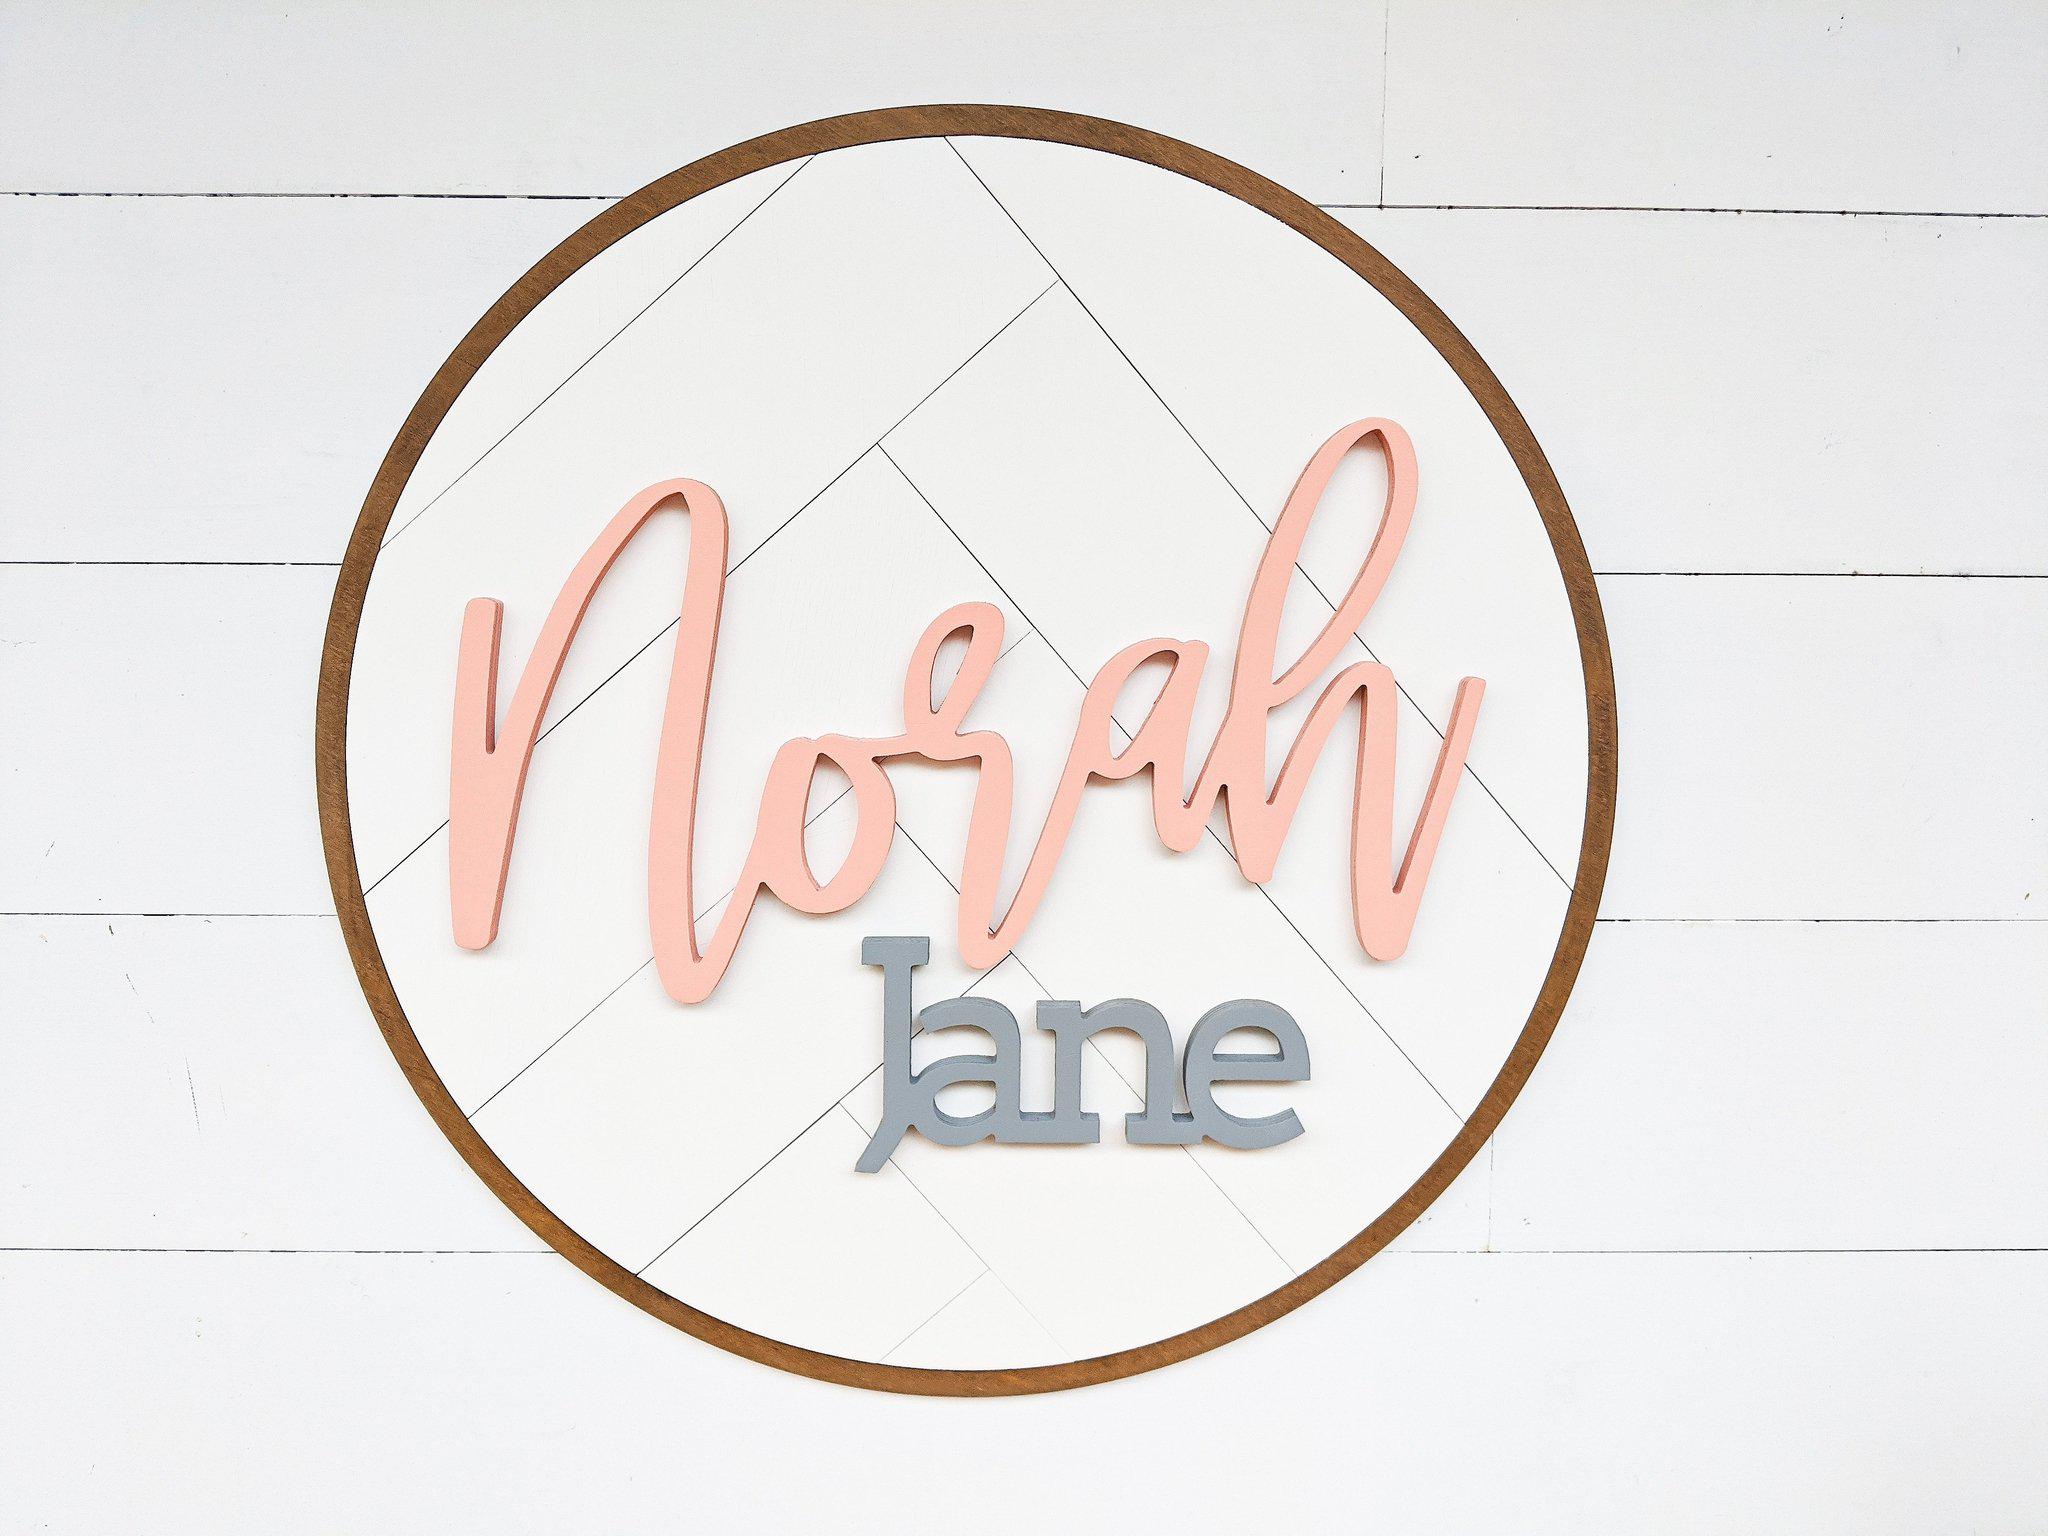 Name Sign - Norah Jane Style